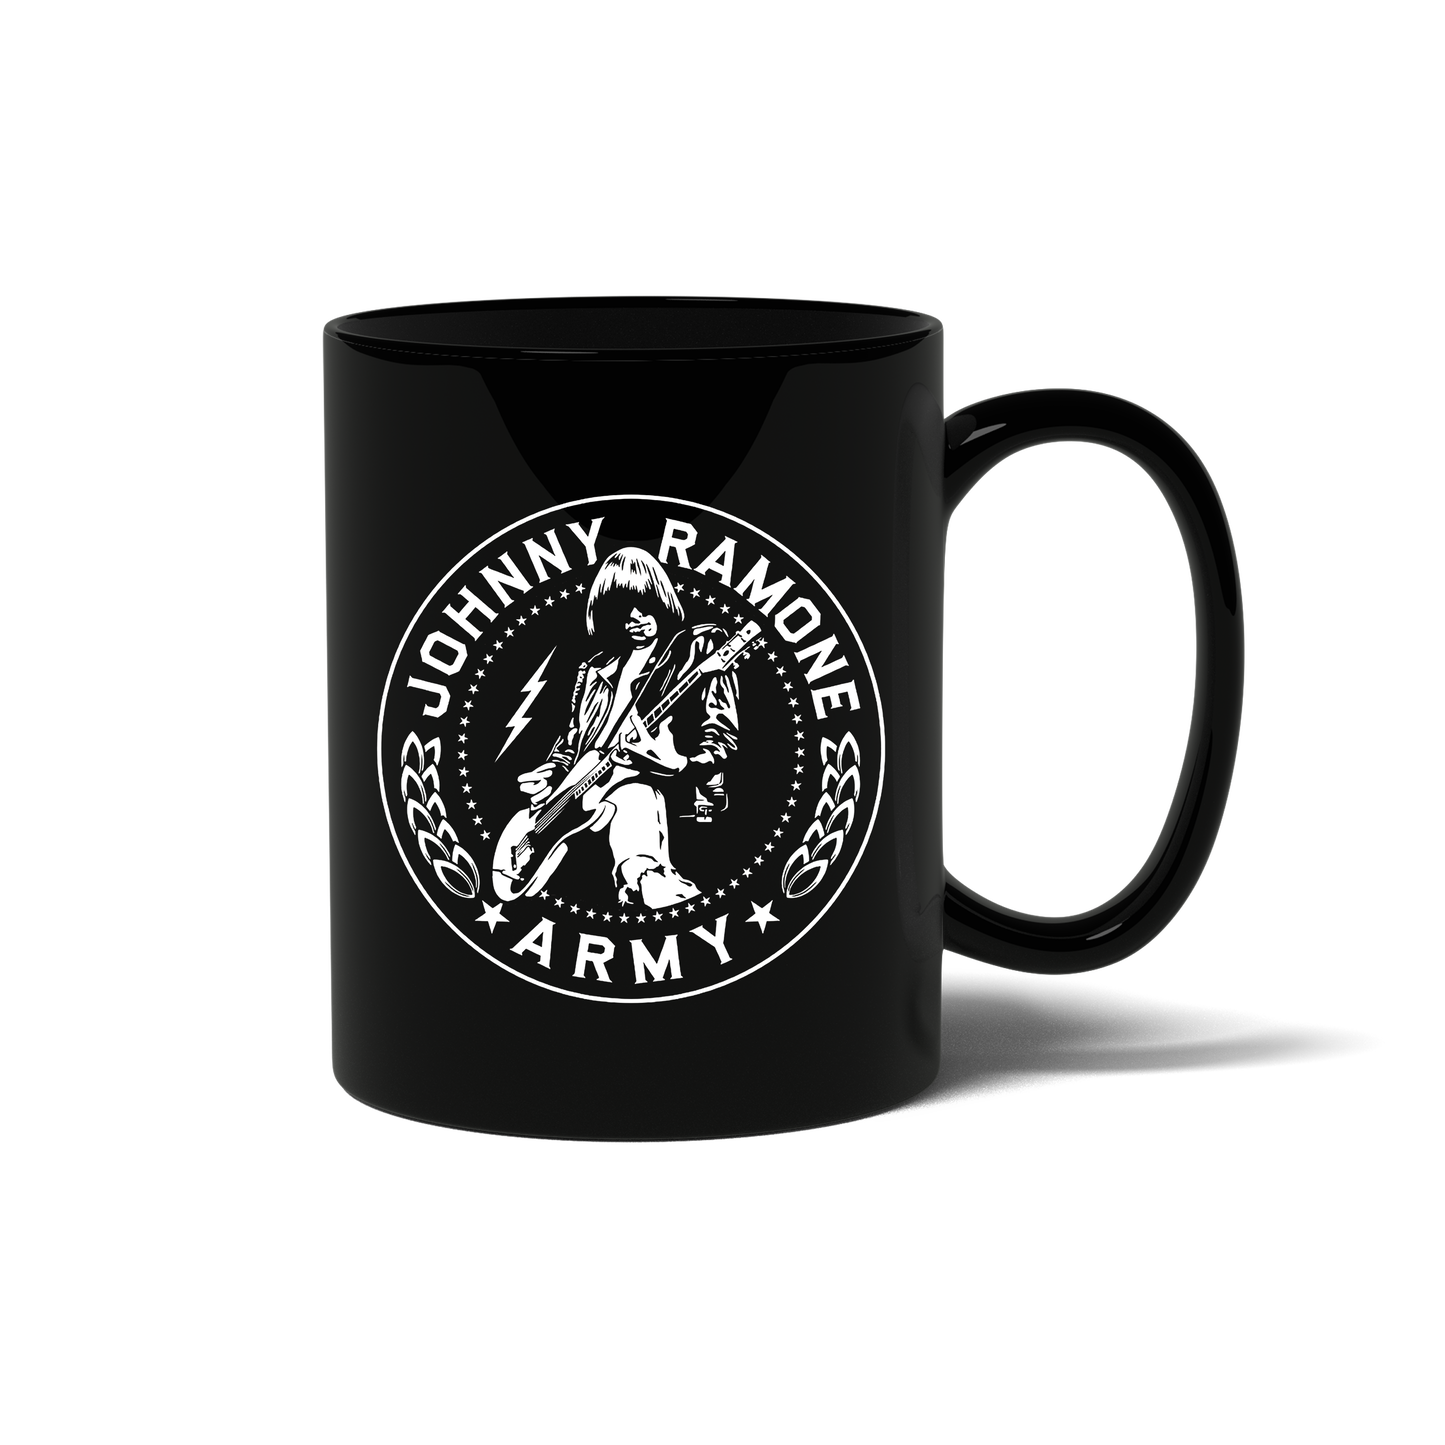 Johnny Ramone Army Mug